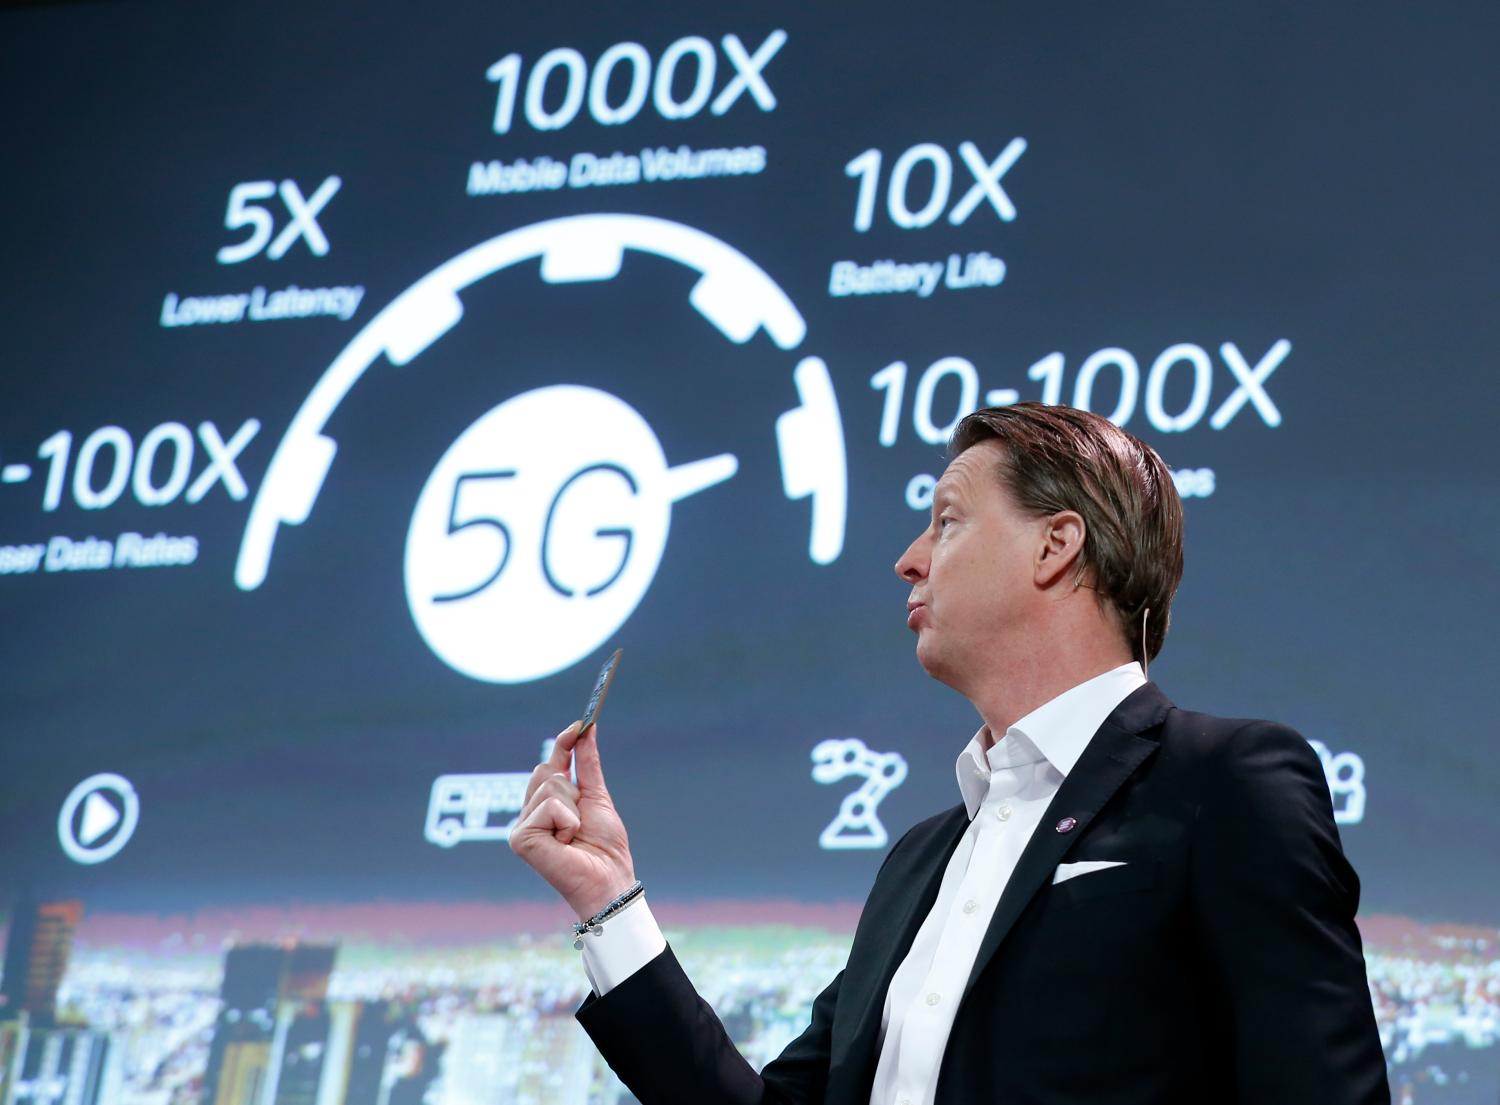 Ericsson's President & CEO Hans Vestberg shows a 5G chip